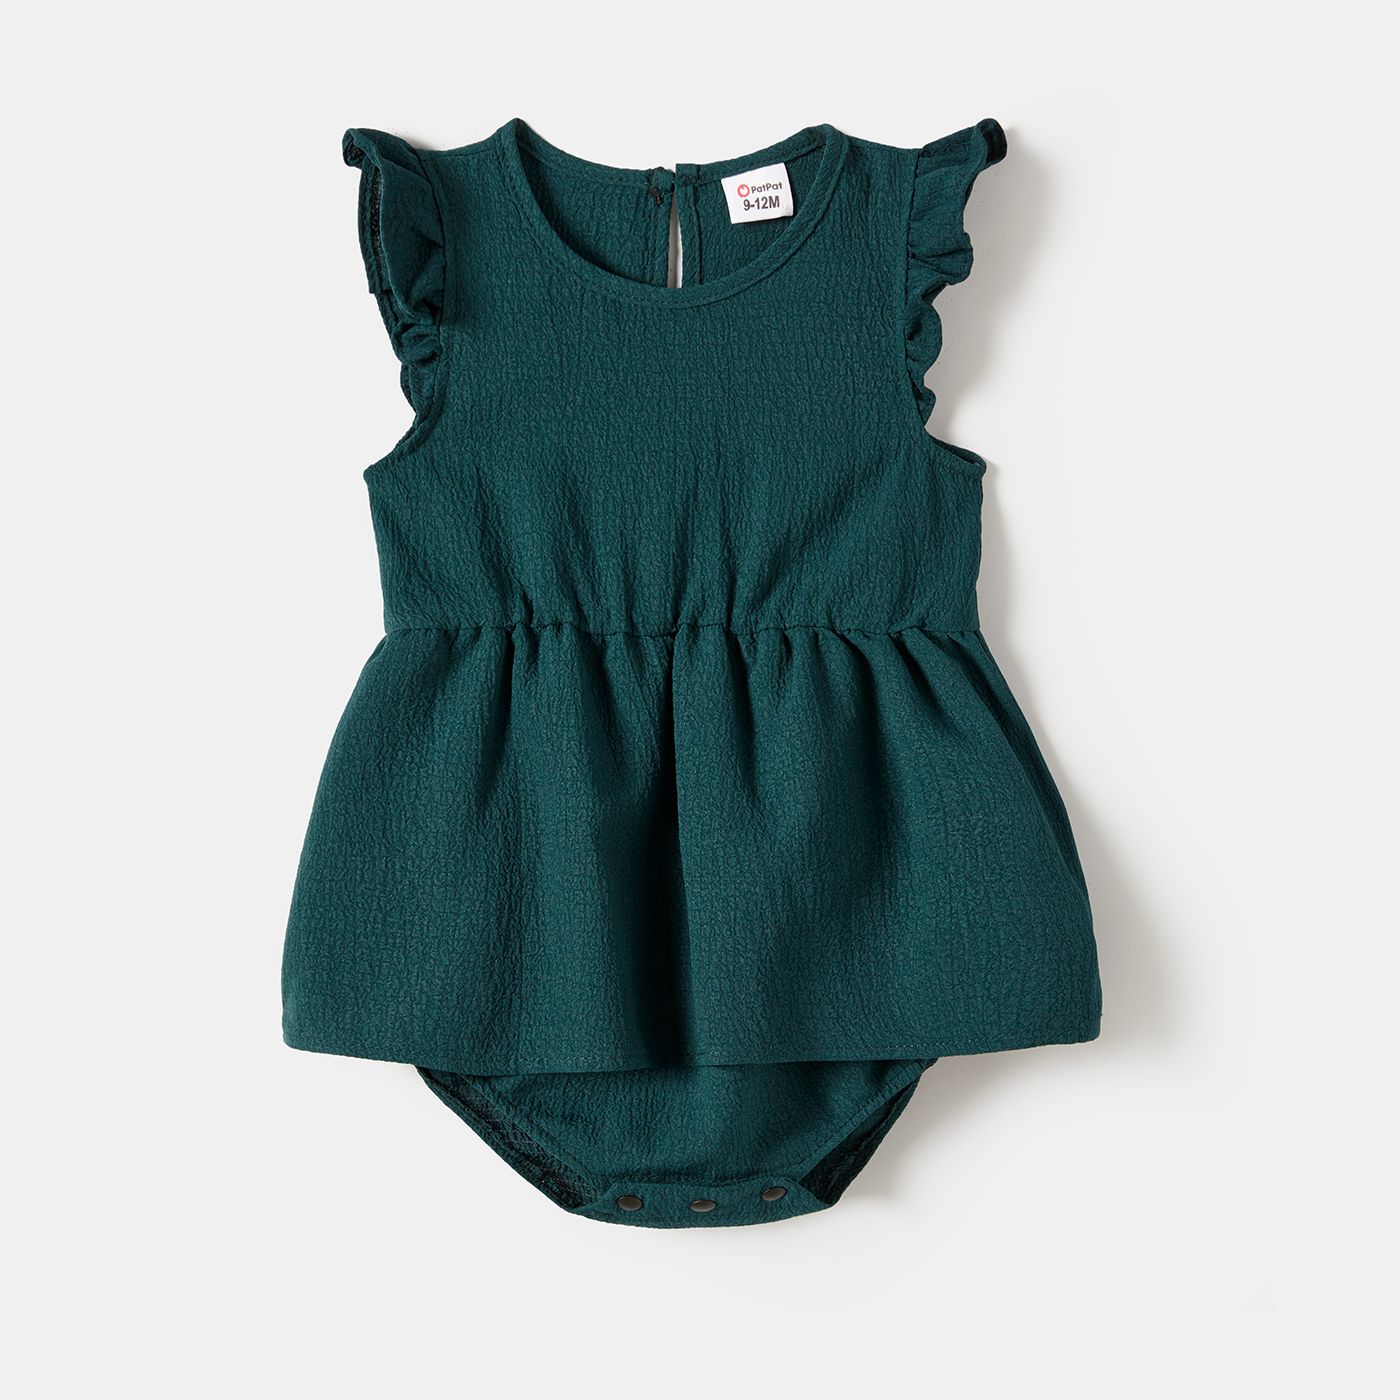 Family Matching Green Solid Color V-neck Belted Dresses And Color Block Short-Sleeved Tops Sets